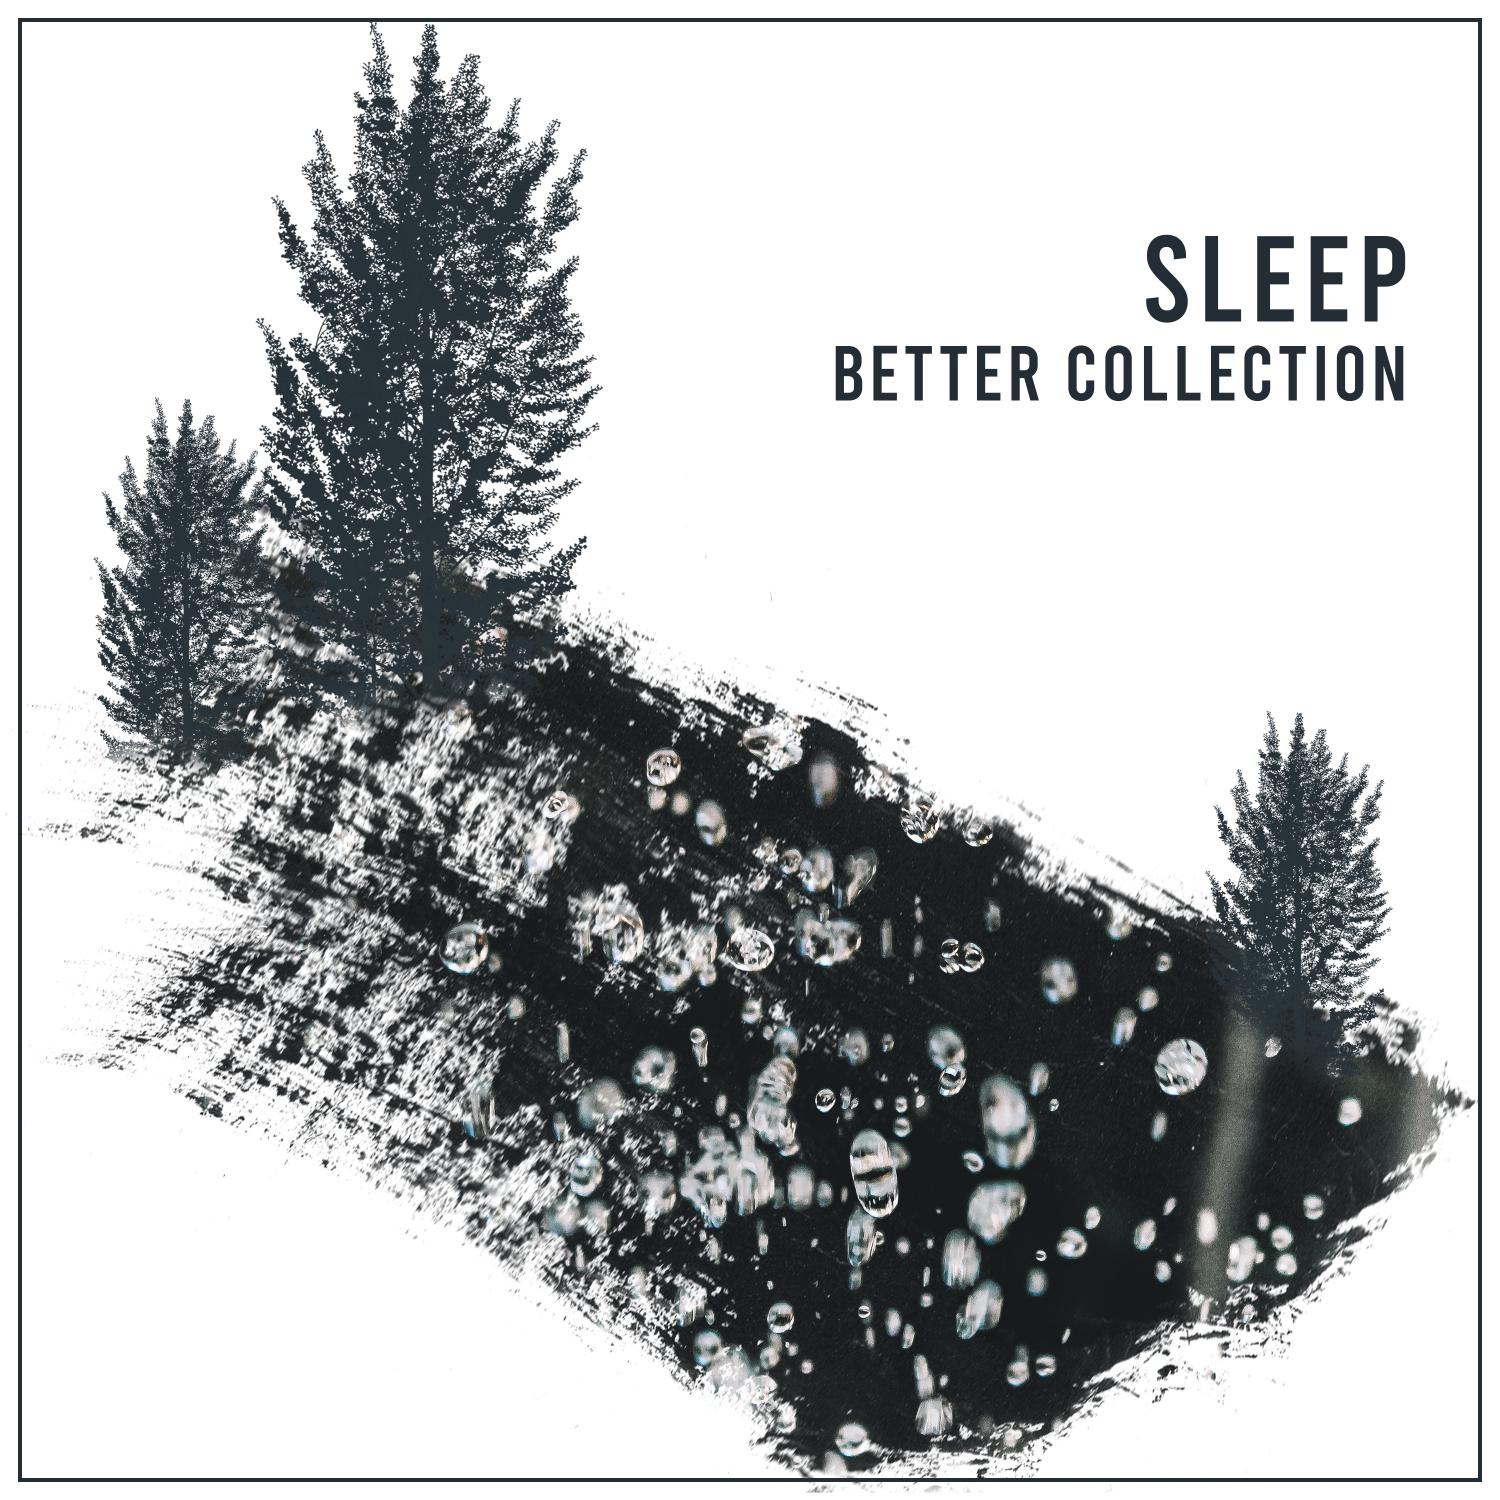 2018 Sleep Better Collection - Rain and Nature for Proper Sleep